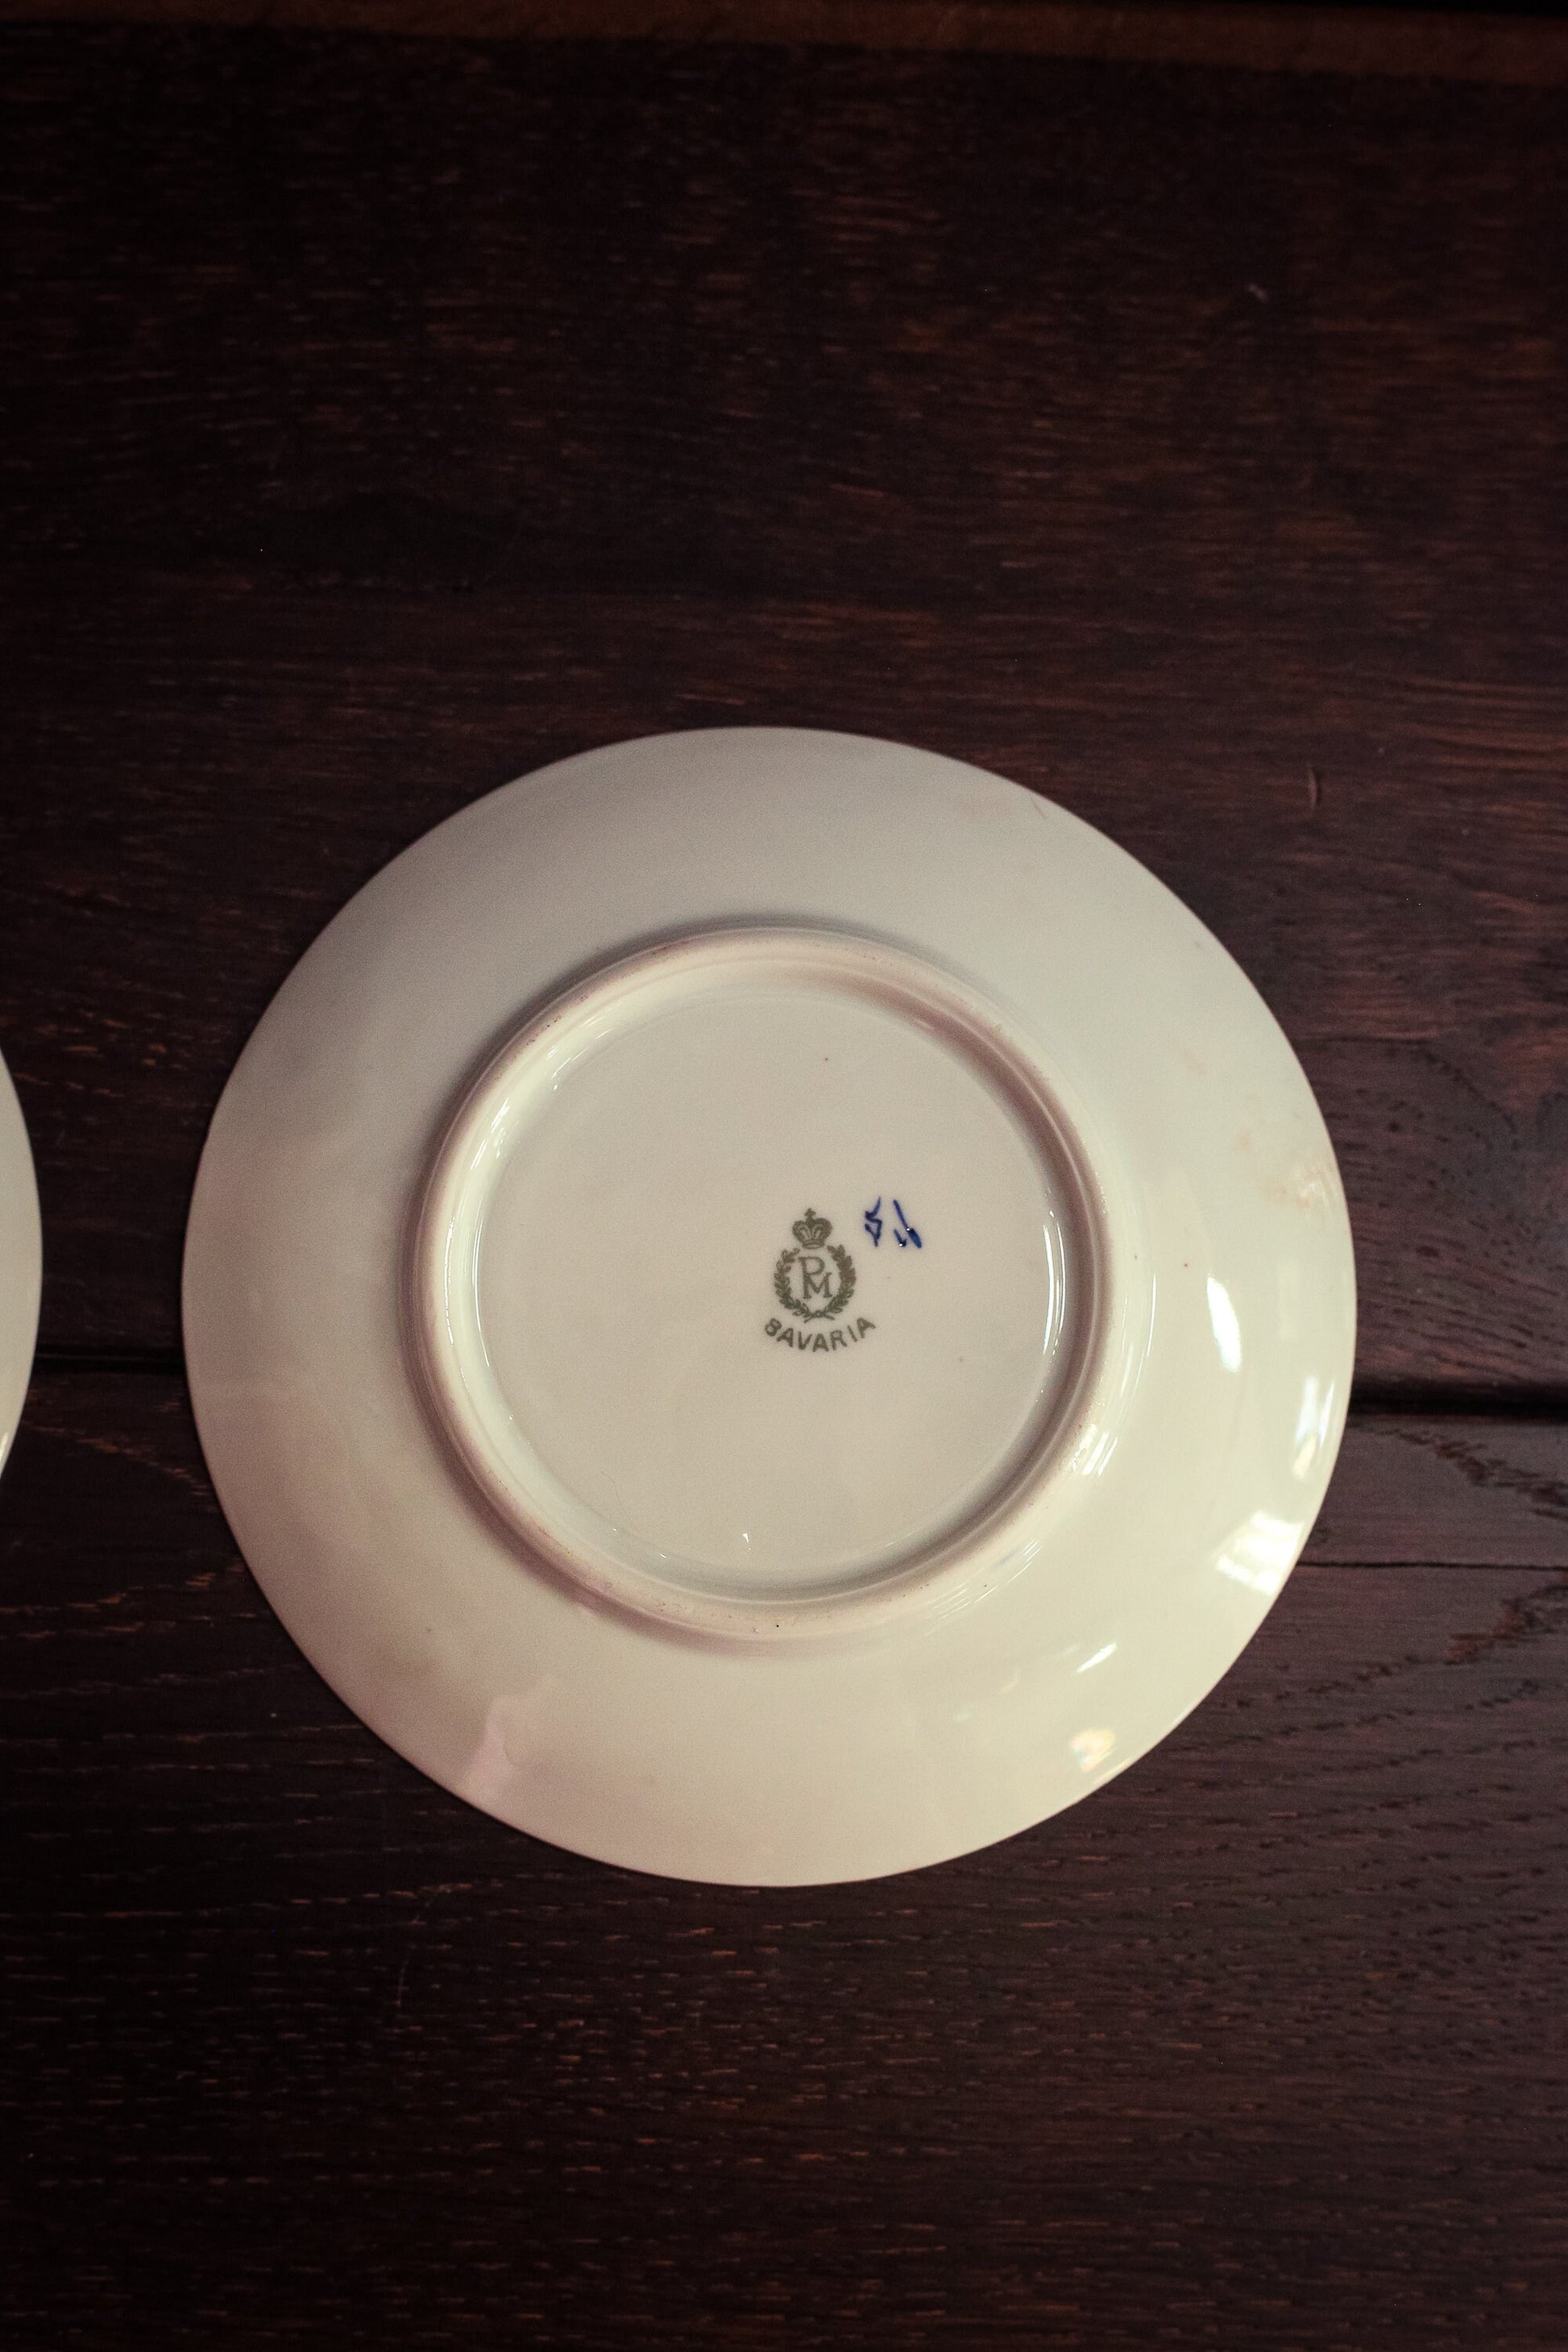 Antique Bavaria PM Winterling Blue Strawflower Dessert Plates Trio - Set of 3 Blue White China Small Plates